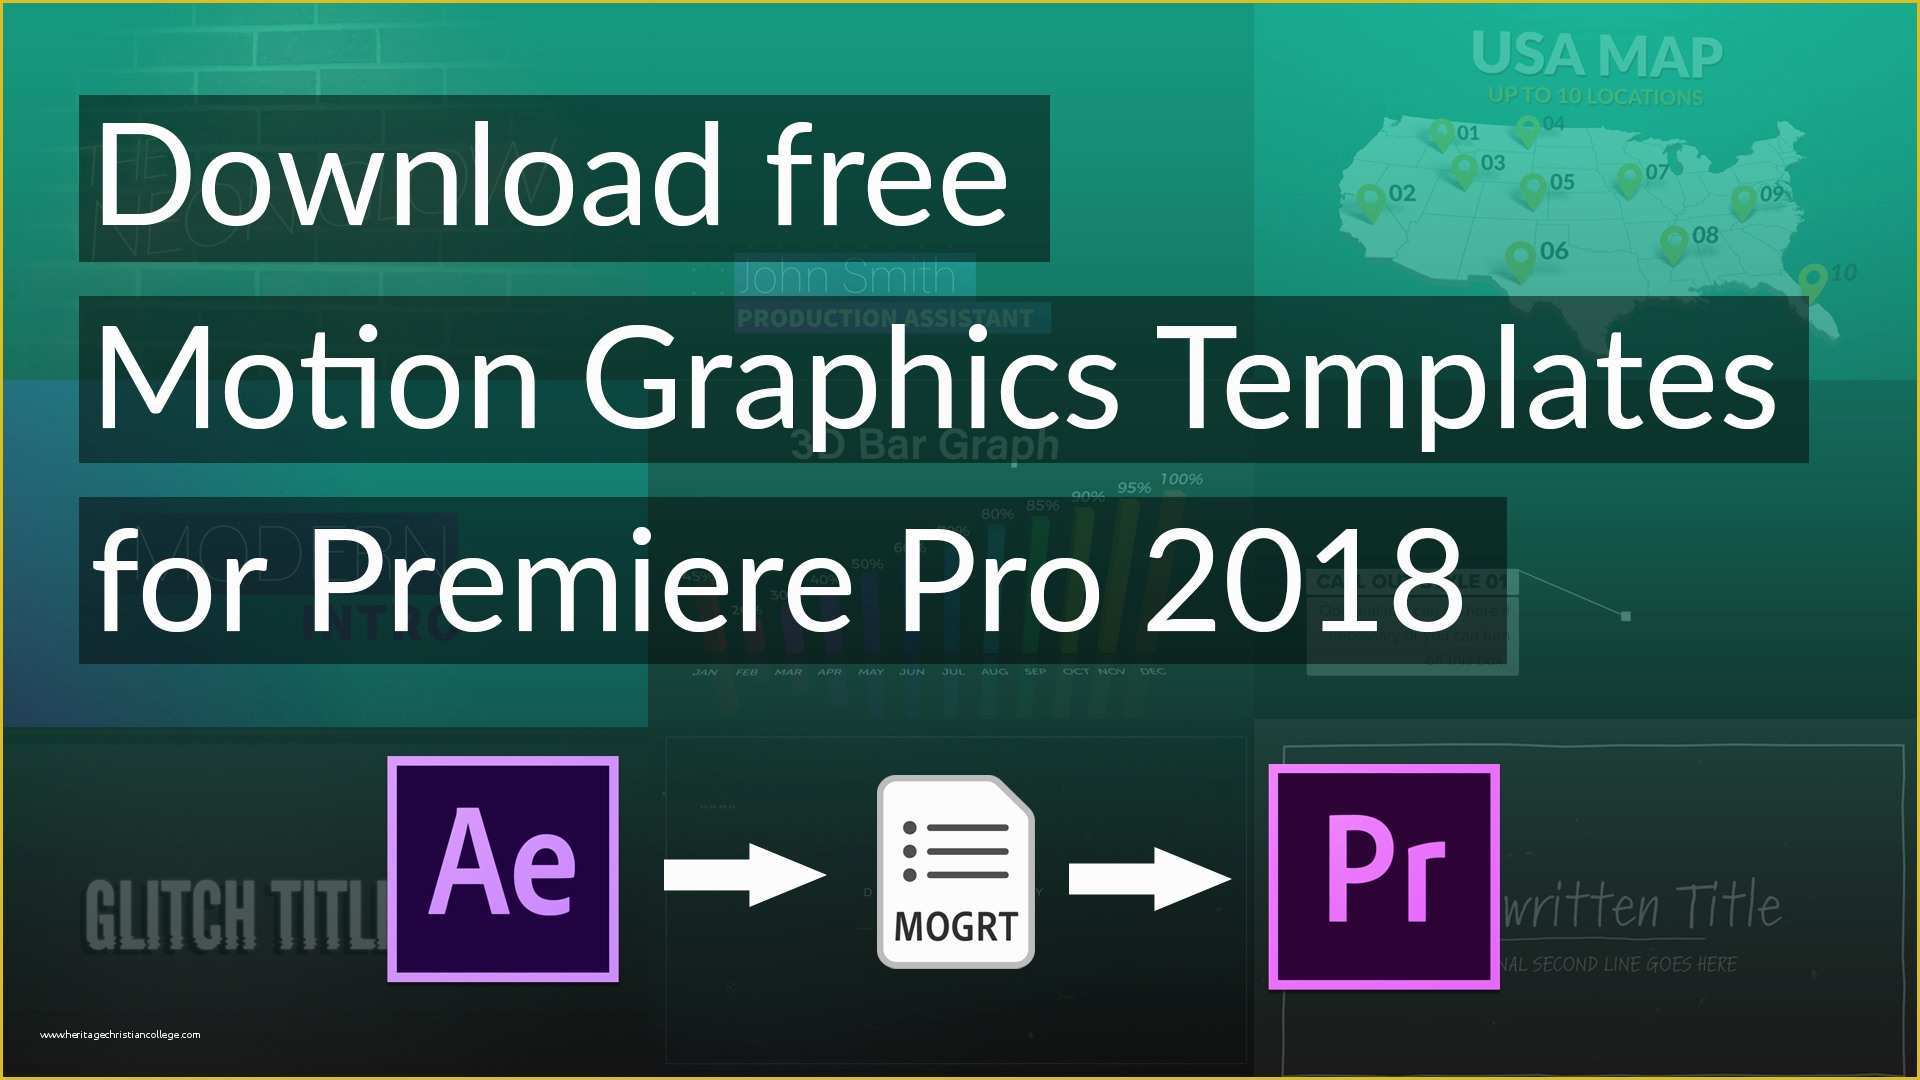 Adobe Premiere Templates Free Of Free Fluxvfx Motion Graphics Templates On Adobe Stock